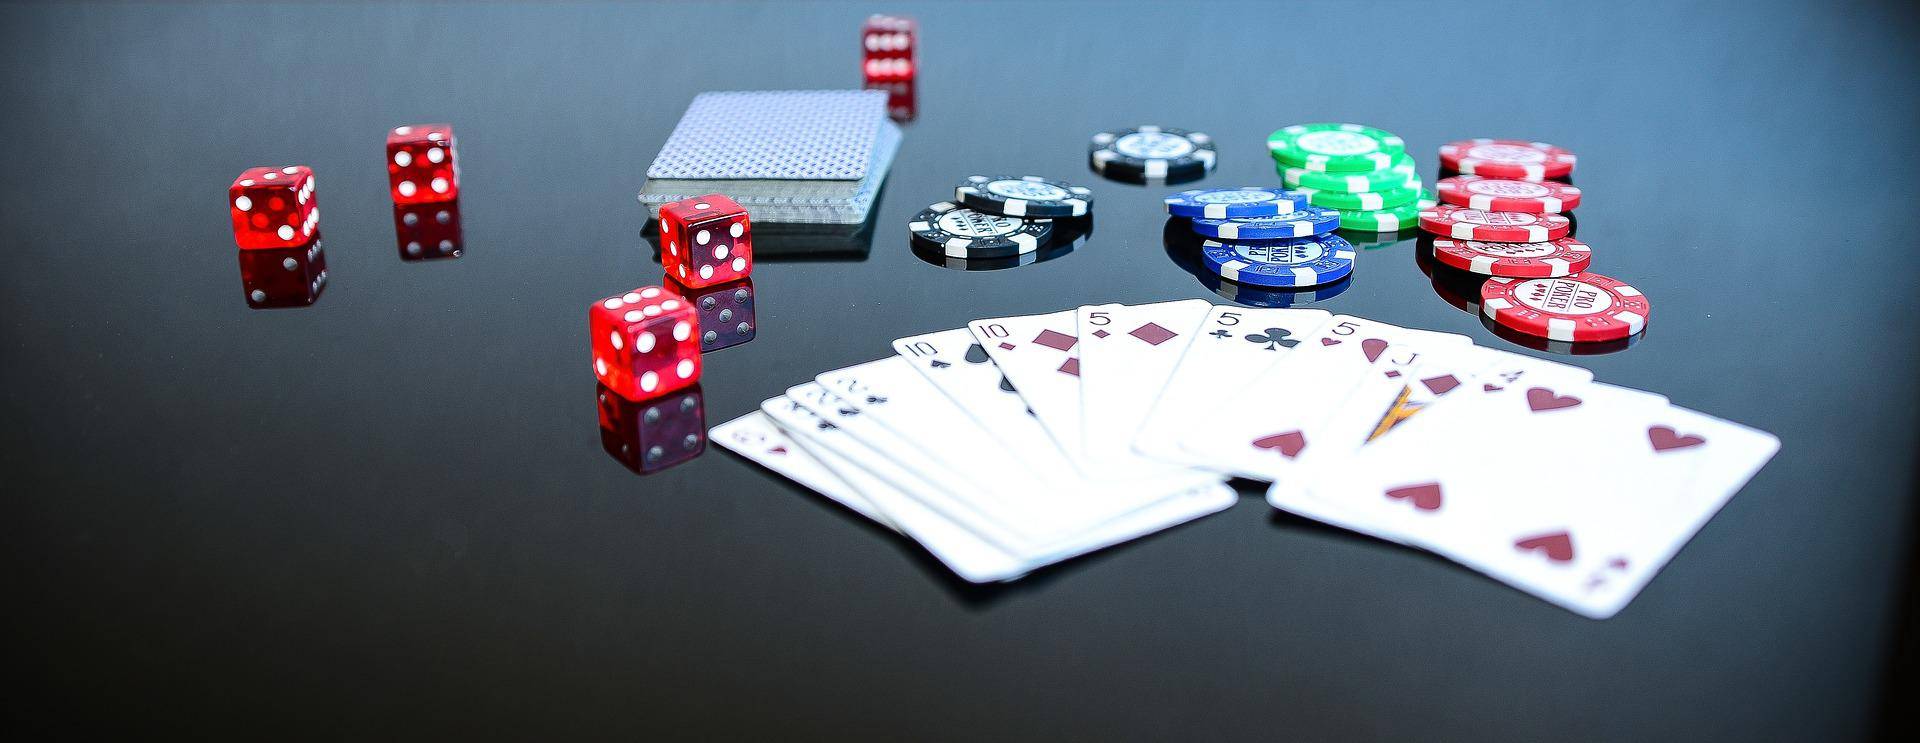 danger of gambling addiction-9776dffe